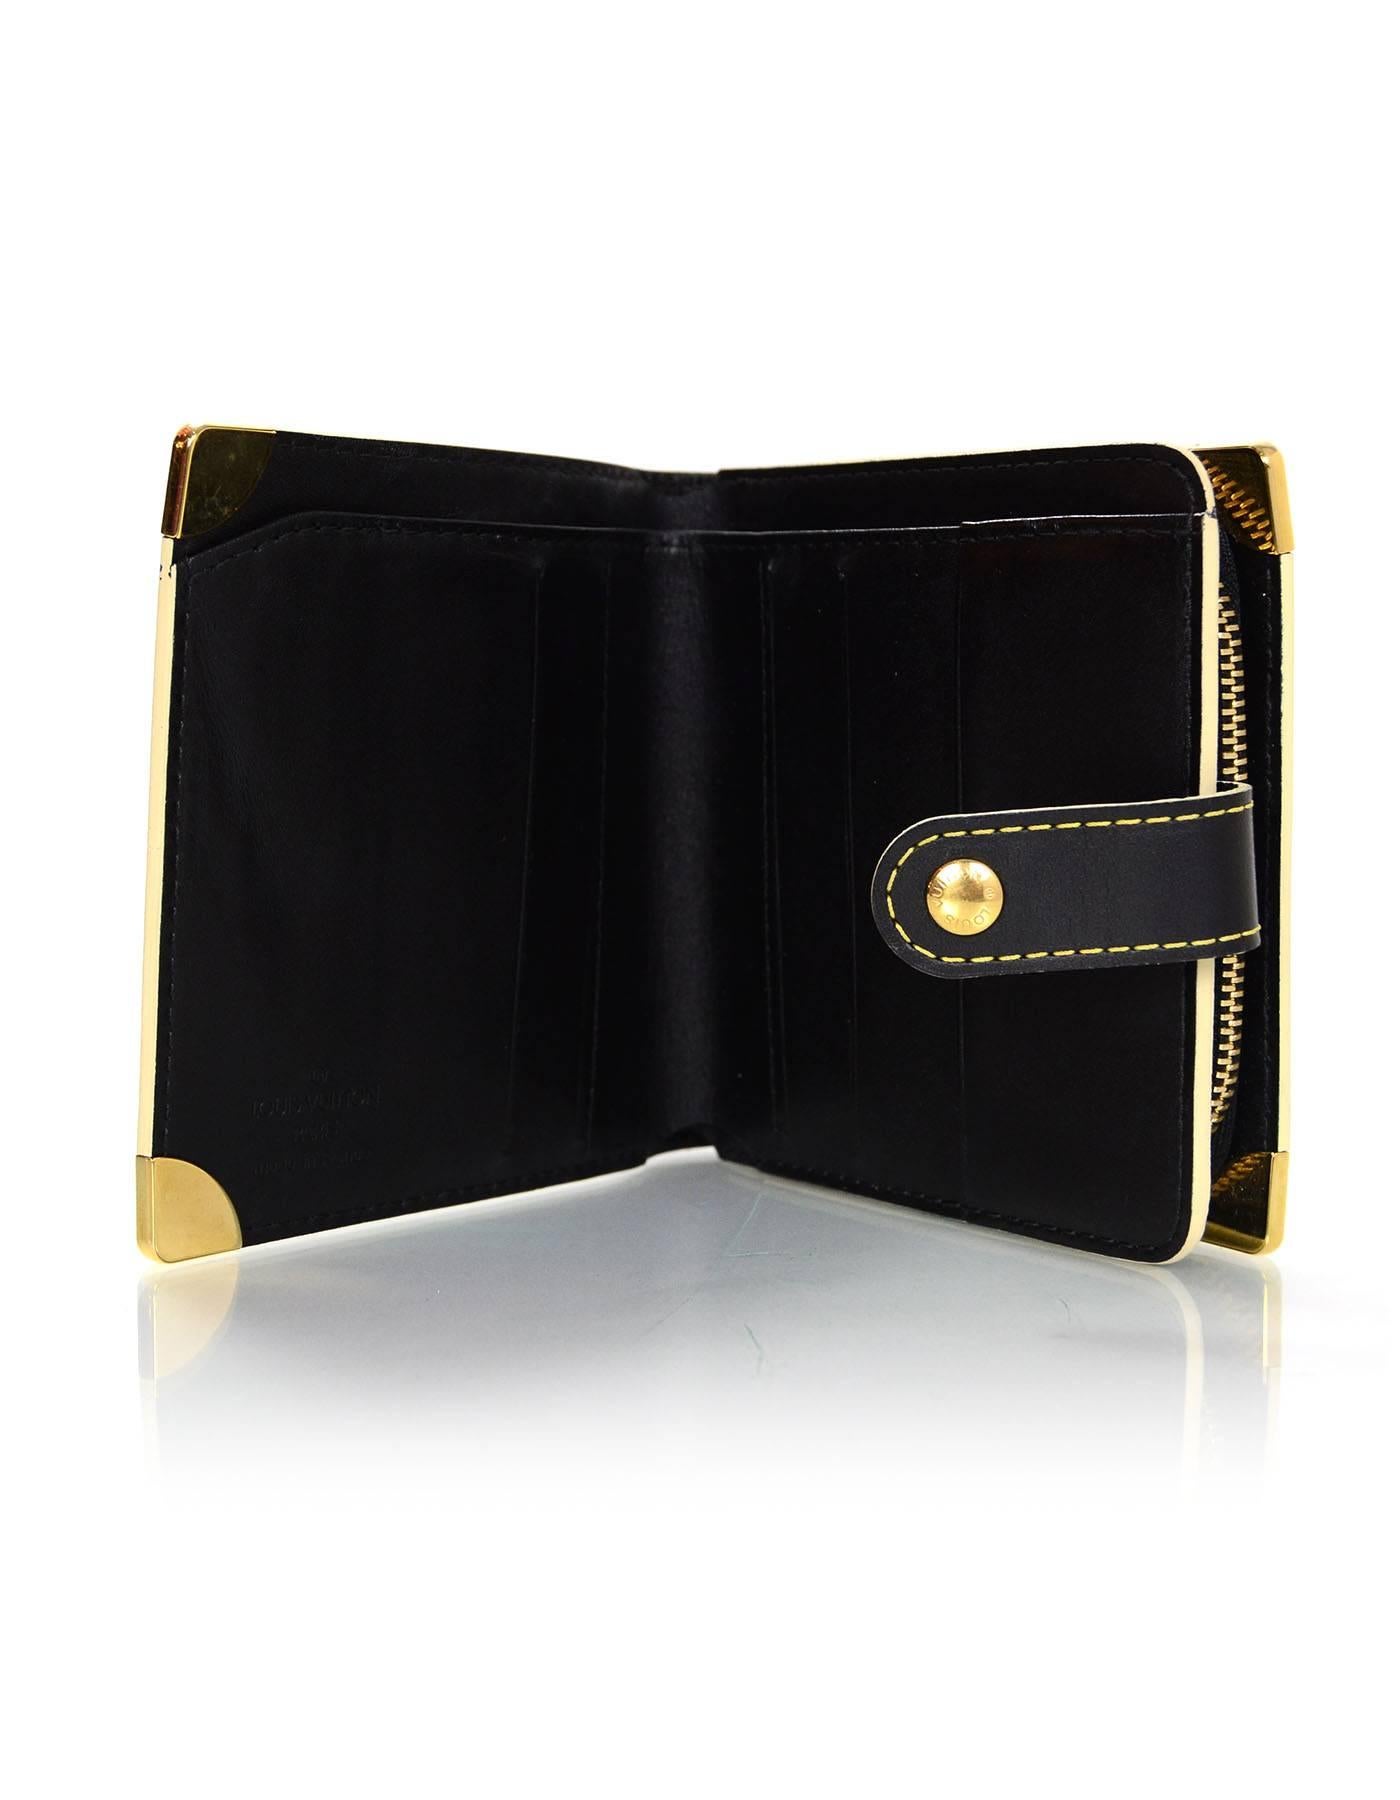 Women's or Men's Louis Vuitton Black Leather Compact Suhali Wallet rt. $690